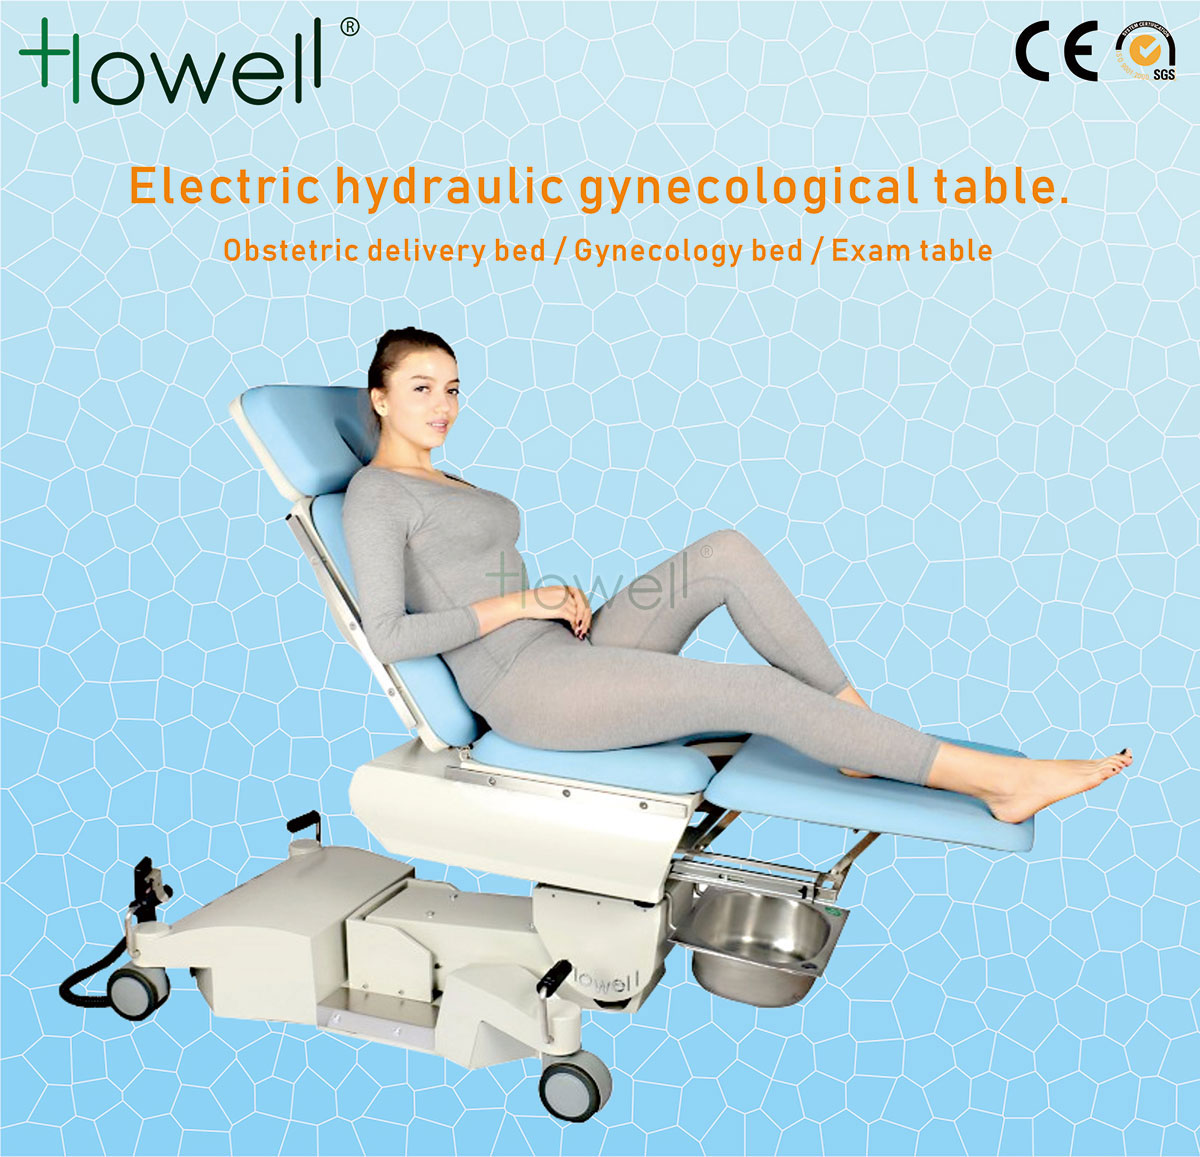 Why do gynecological beds choose Big feet wheel design?